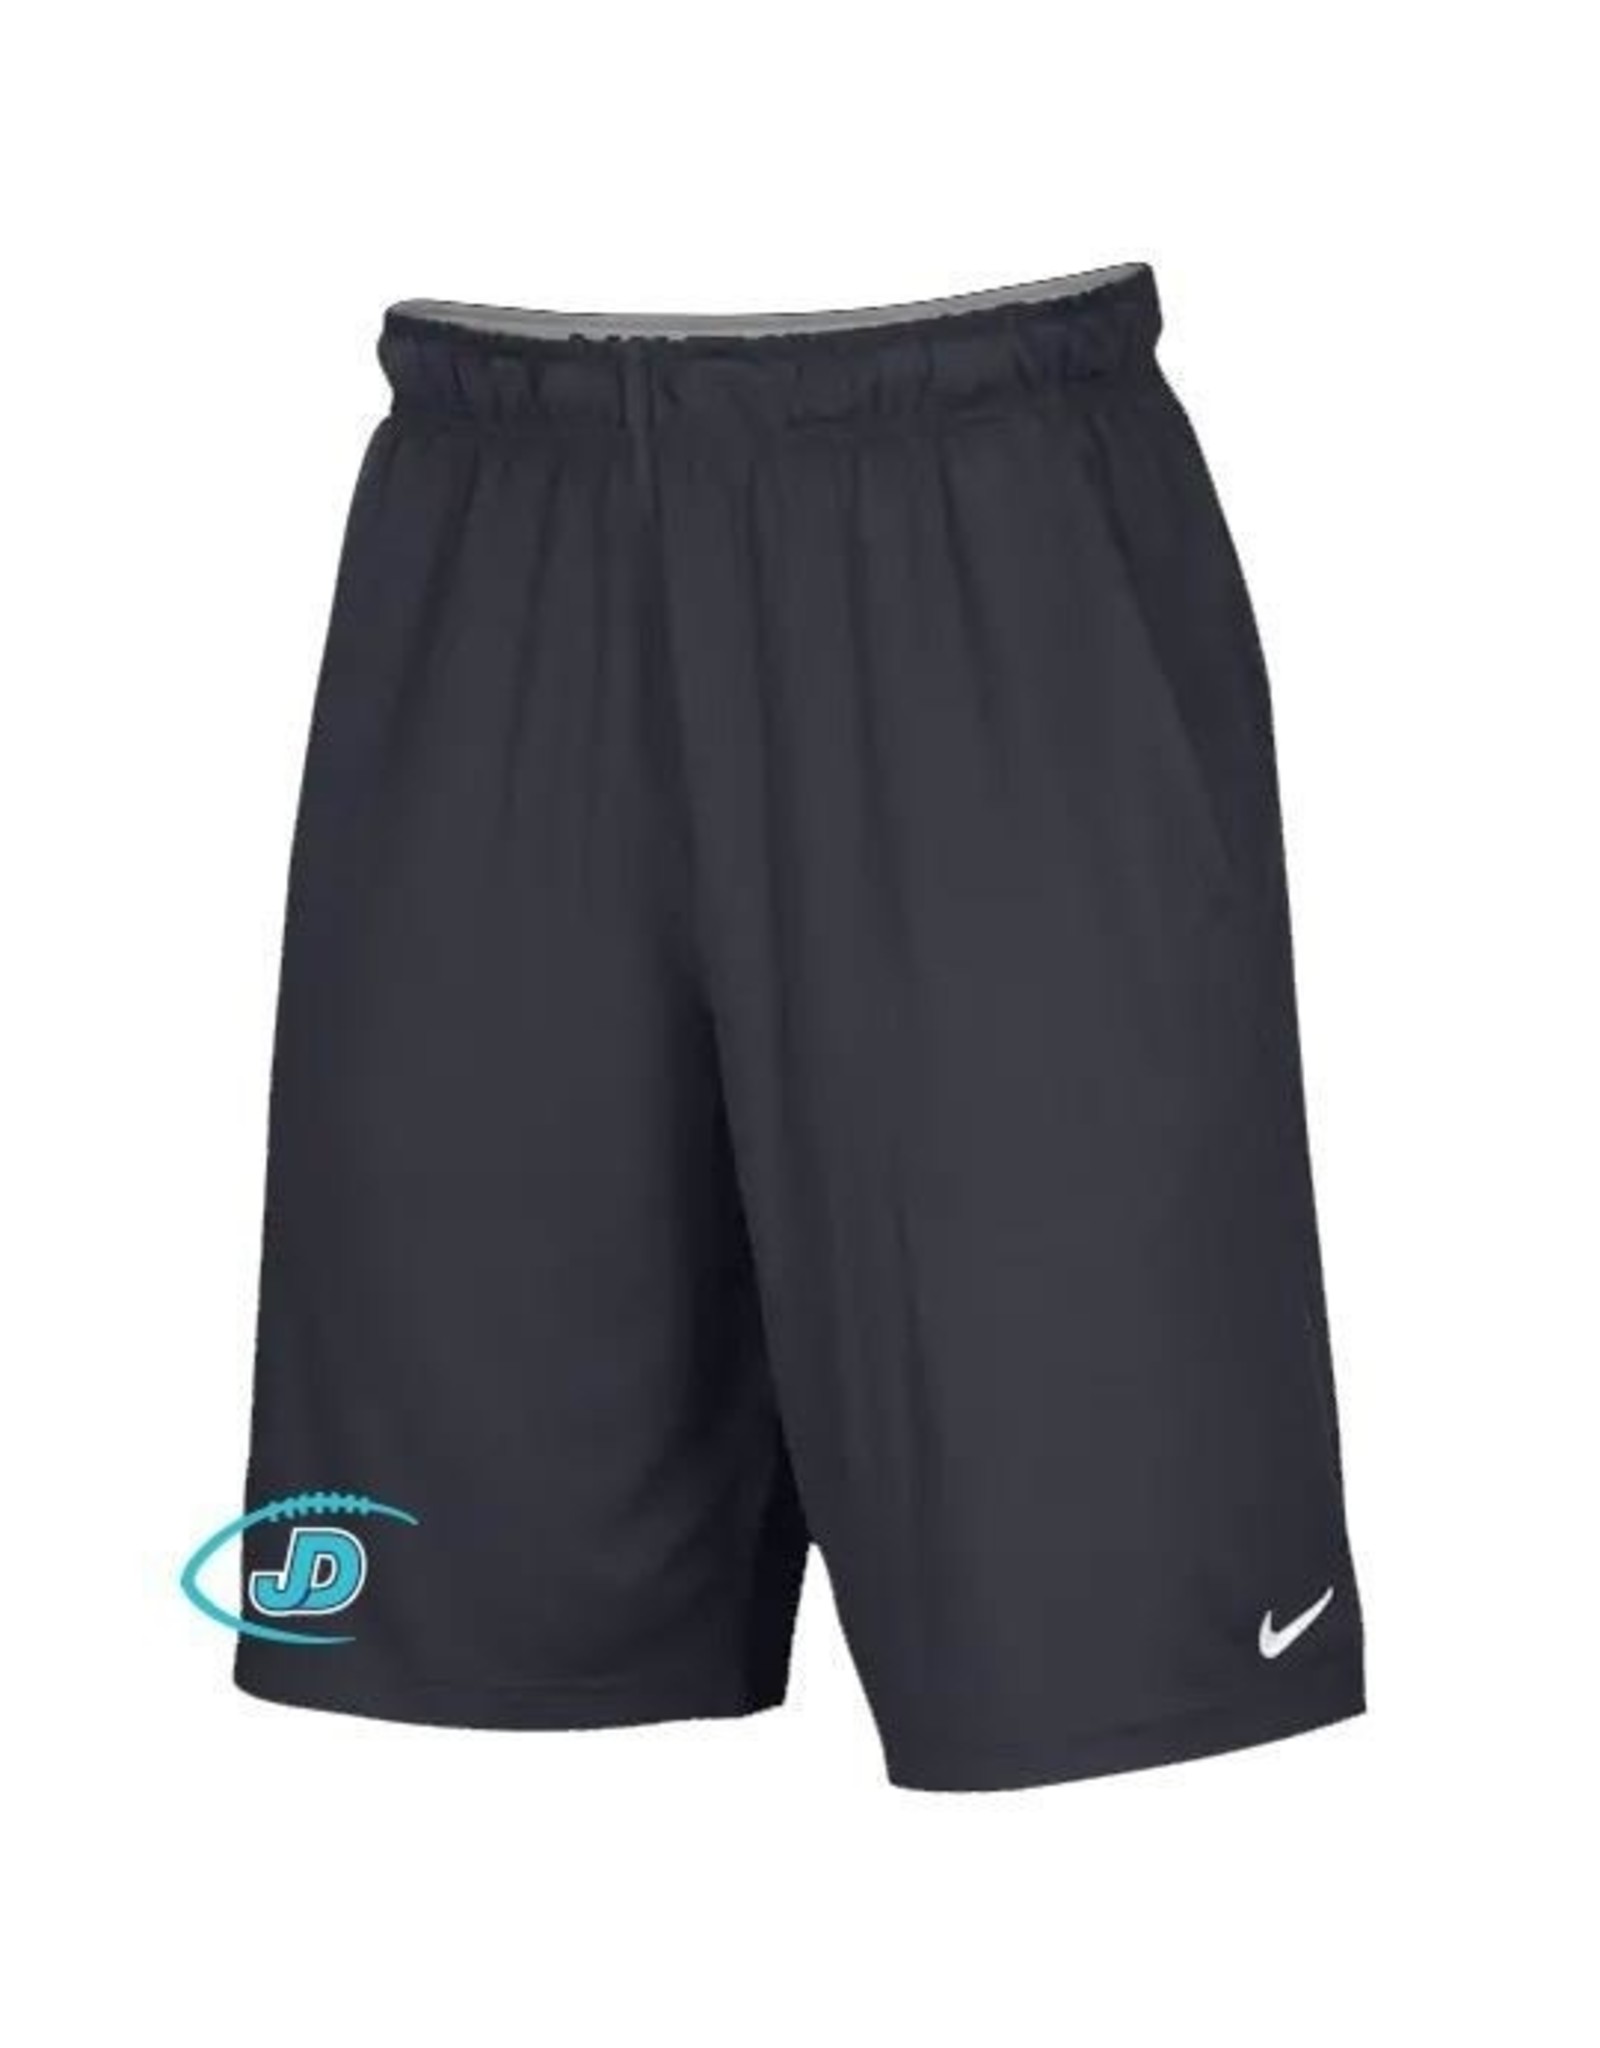 NON-UNIFORM Nike Team JD Athletic Shorts w/ Pockets, football - adult sizes